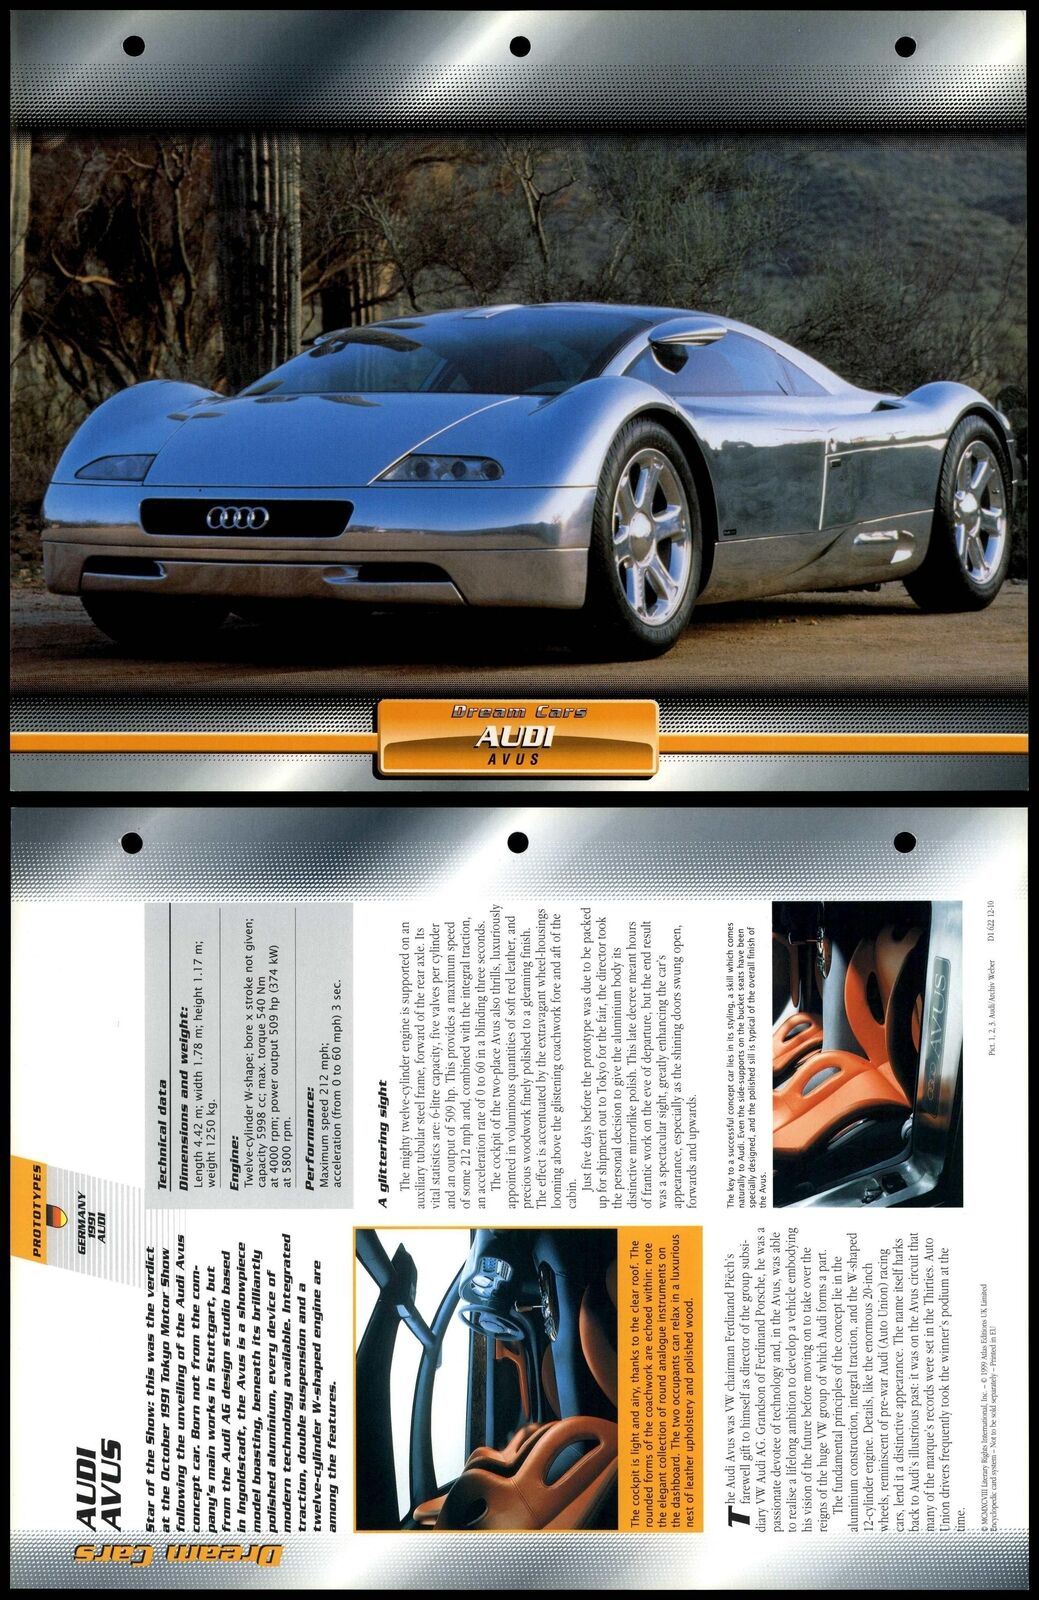 Audi Avus - 1991 - Prototypes - Atlas Dream Cars Fact File Card